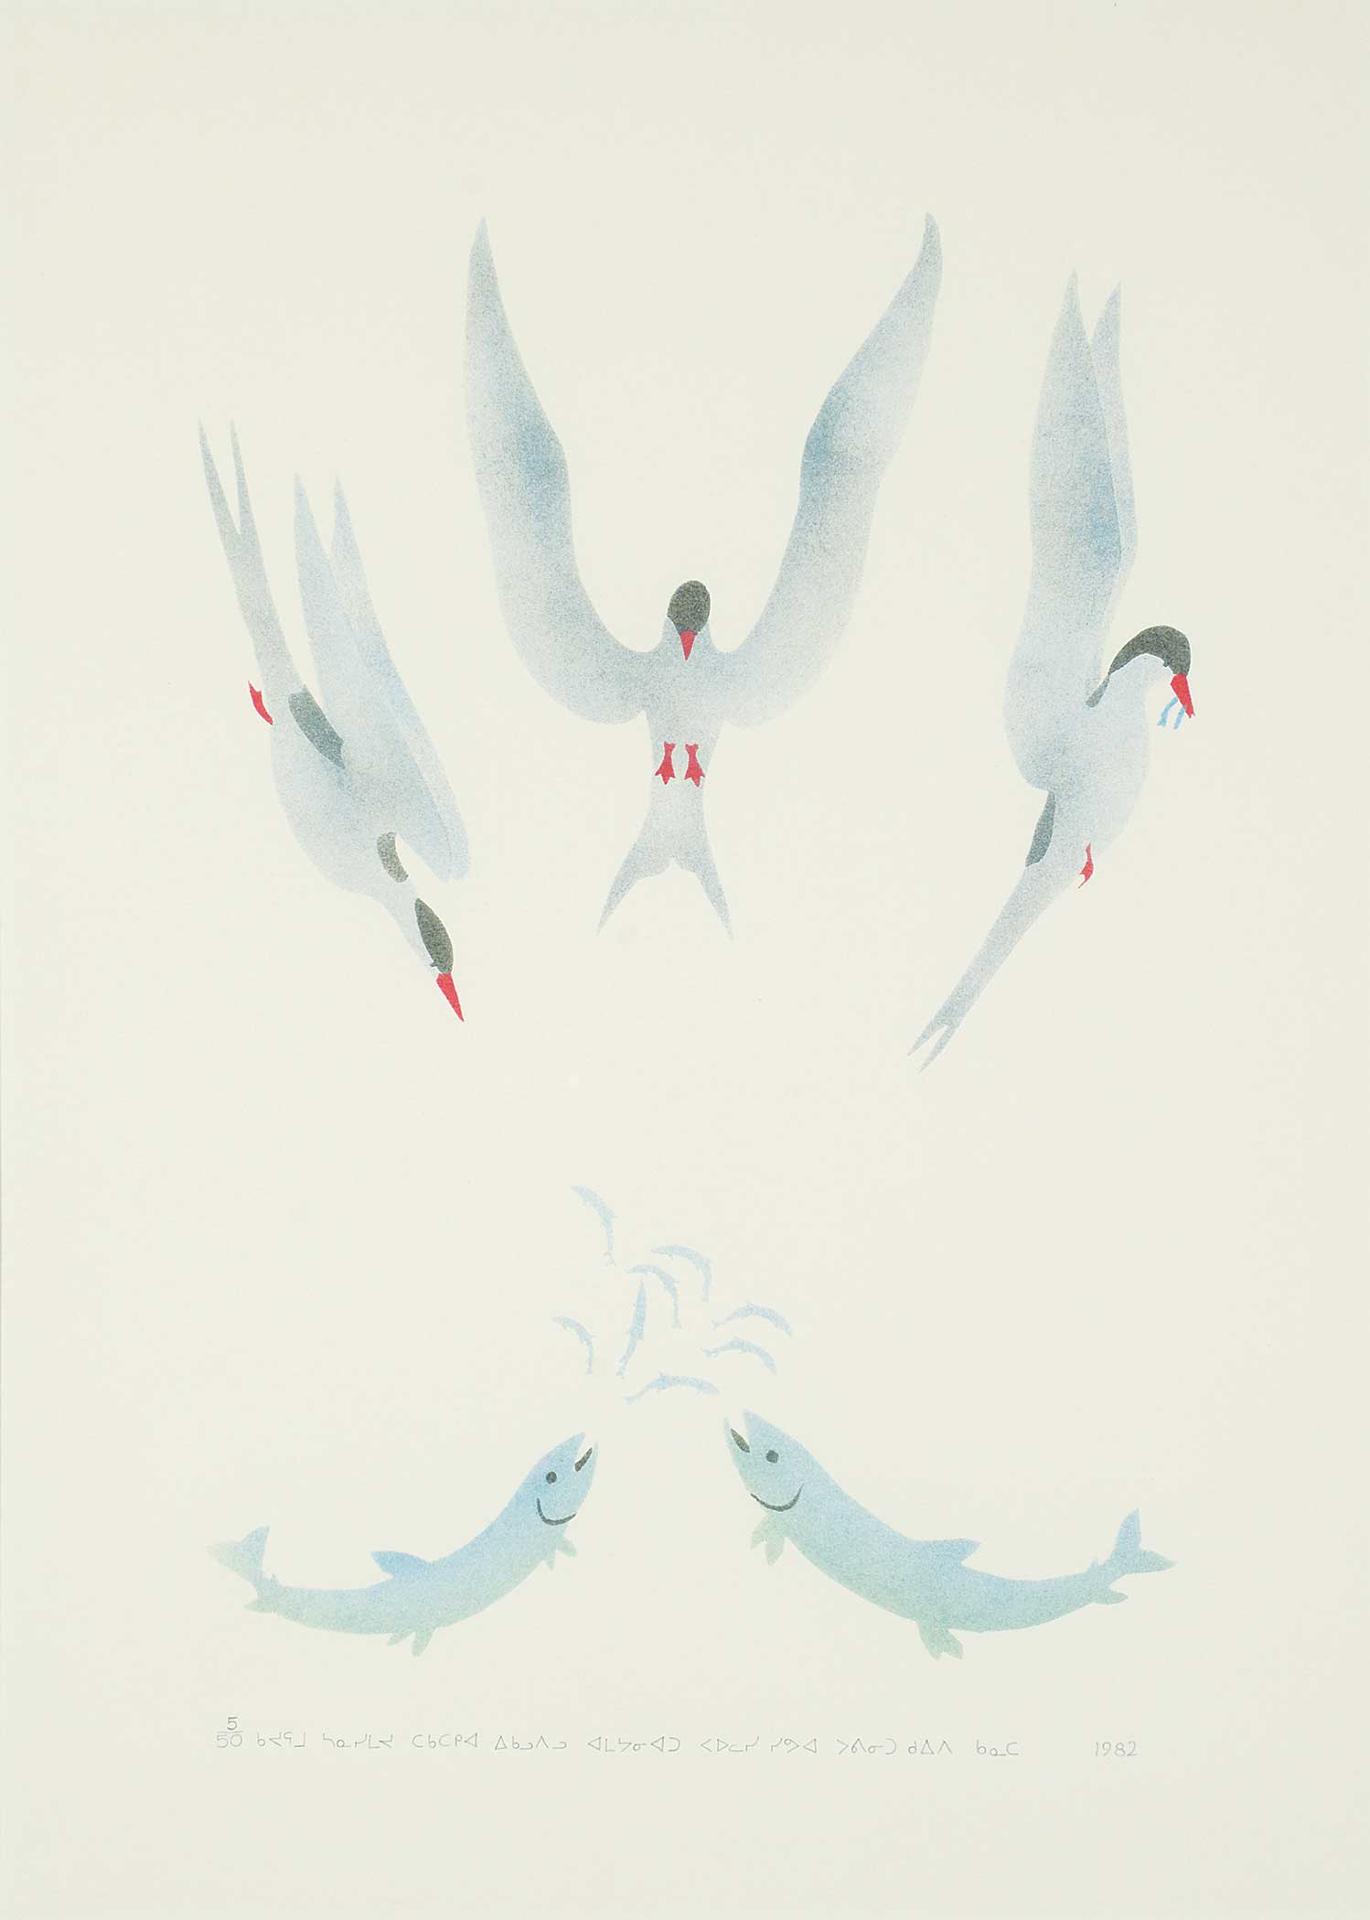 Paulosie Amamatuak Sivuak (1930-1986) - Three Birds, Two Fish  #5/50